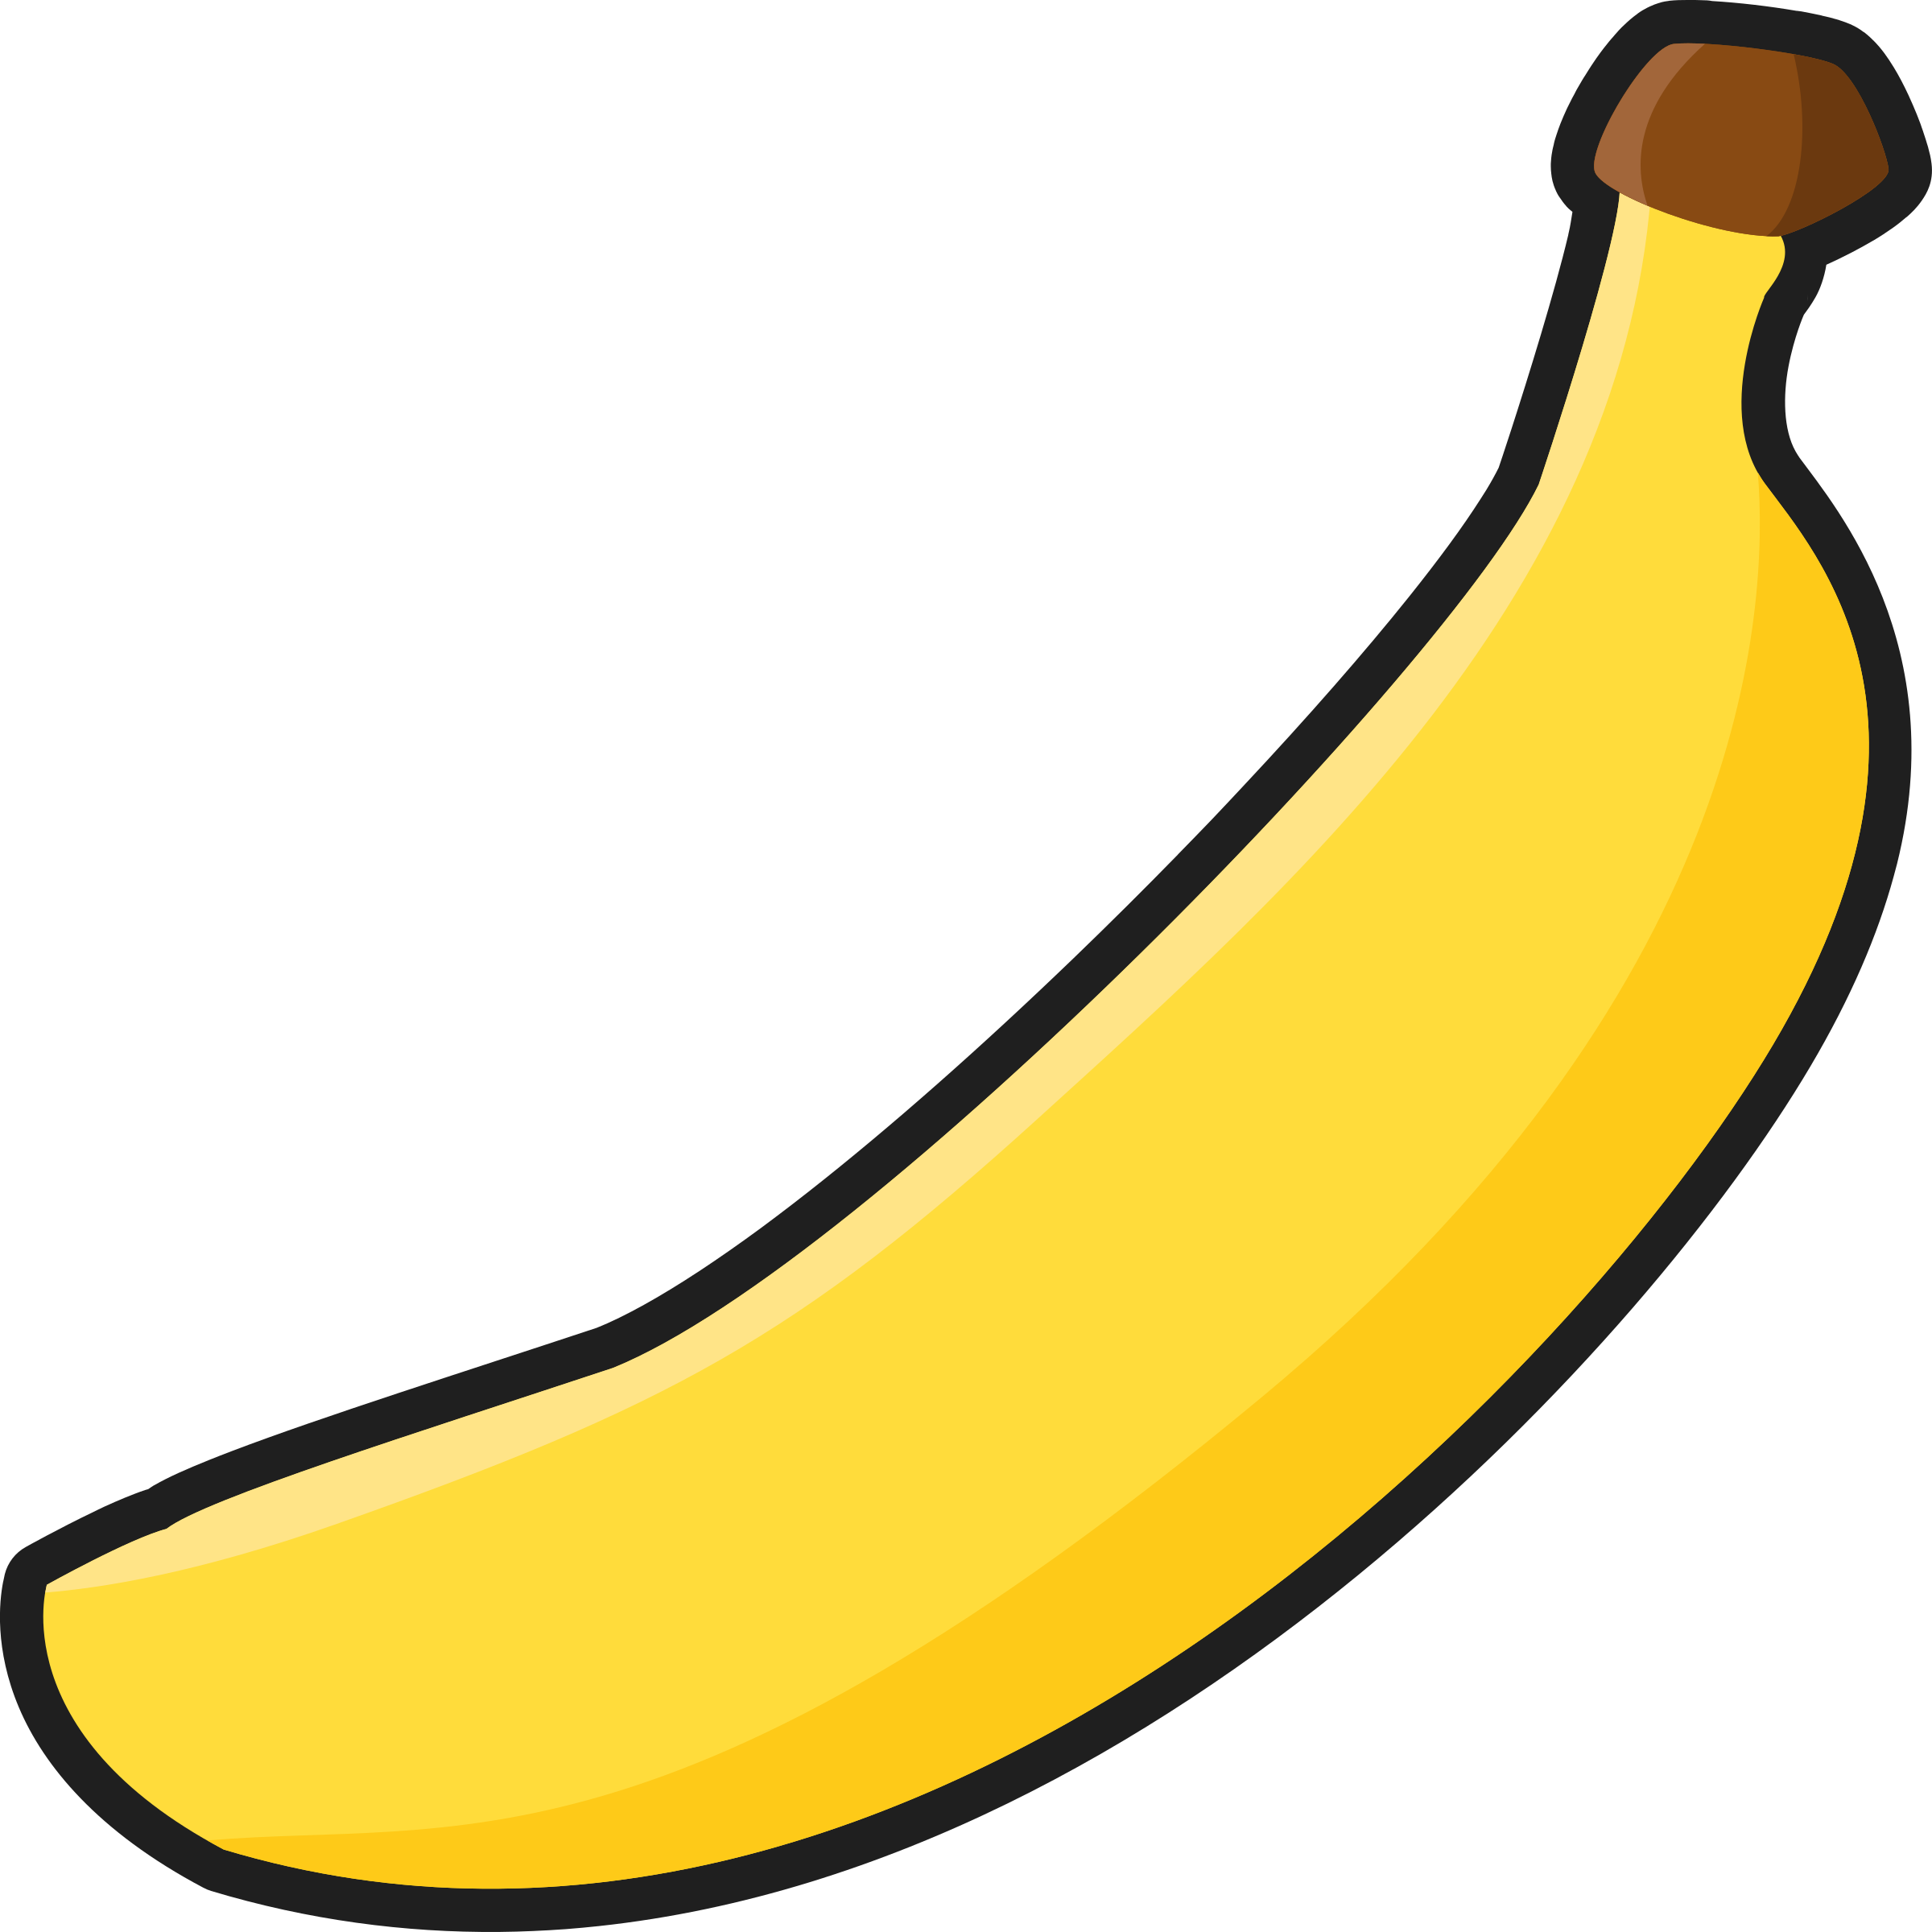 Clipart simple banana.